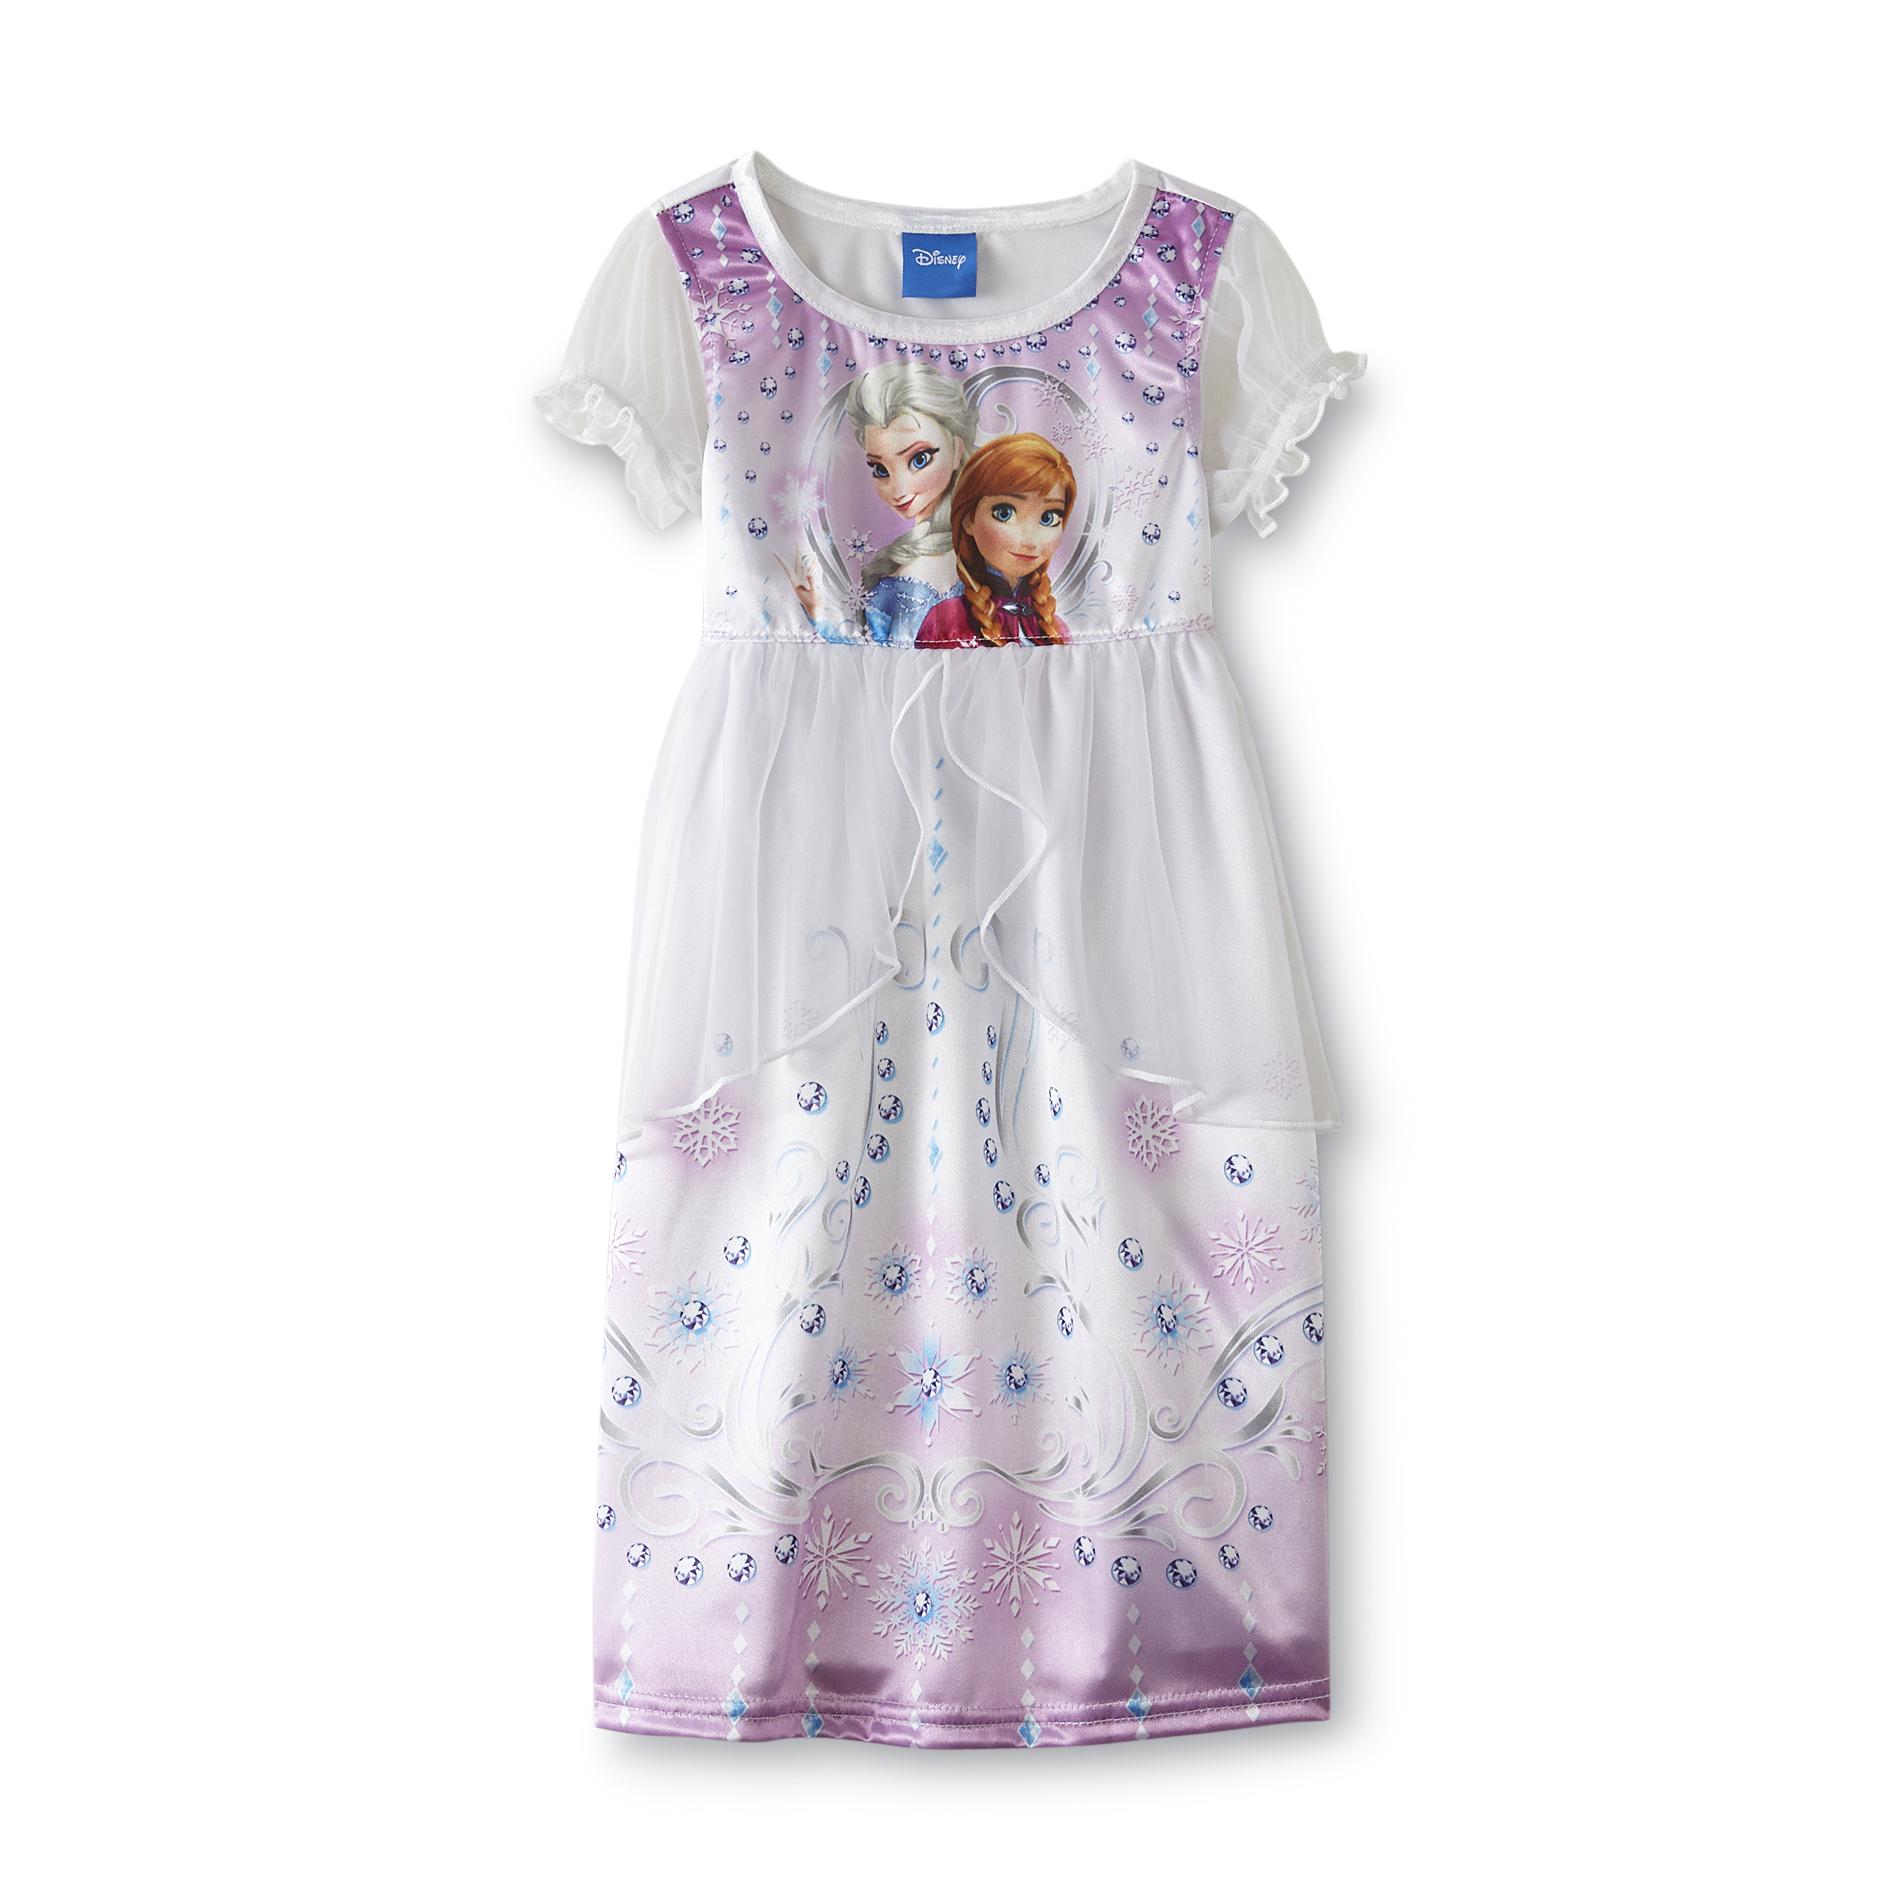 Disney Frozen Toddler Girl's Nightgown - Anna & Elsa